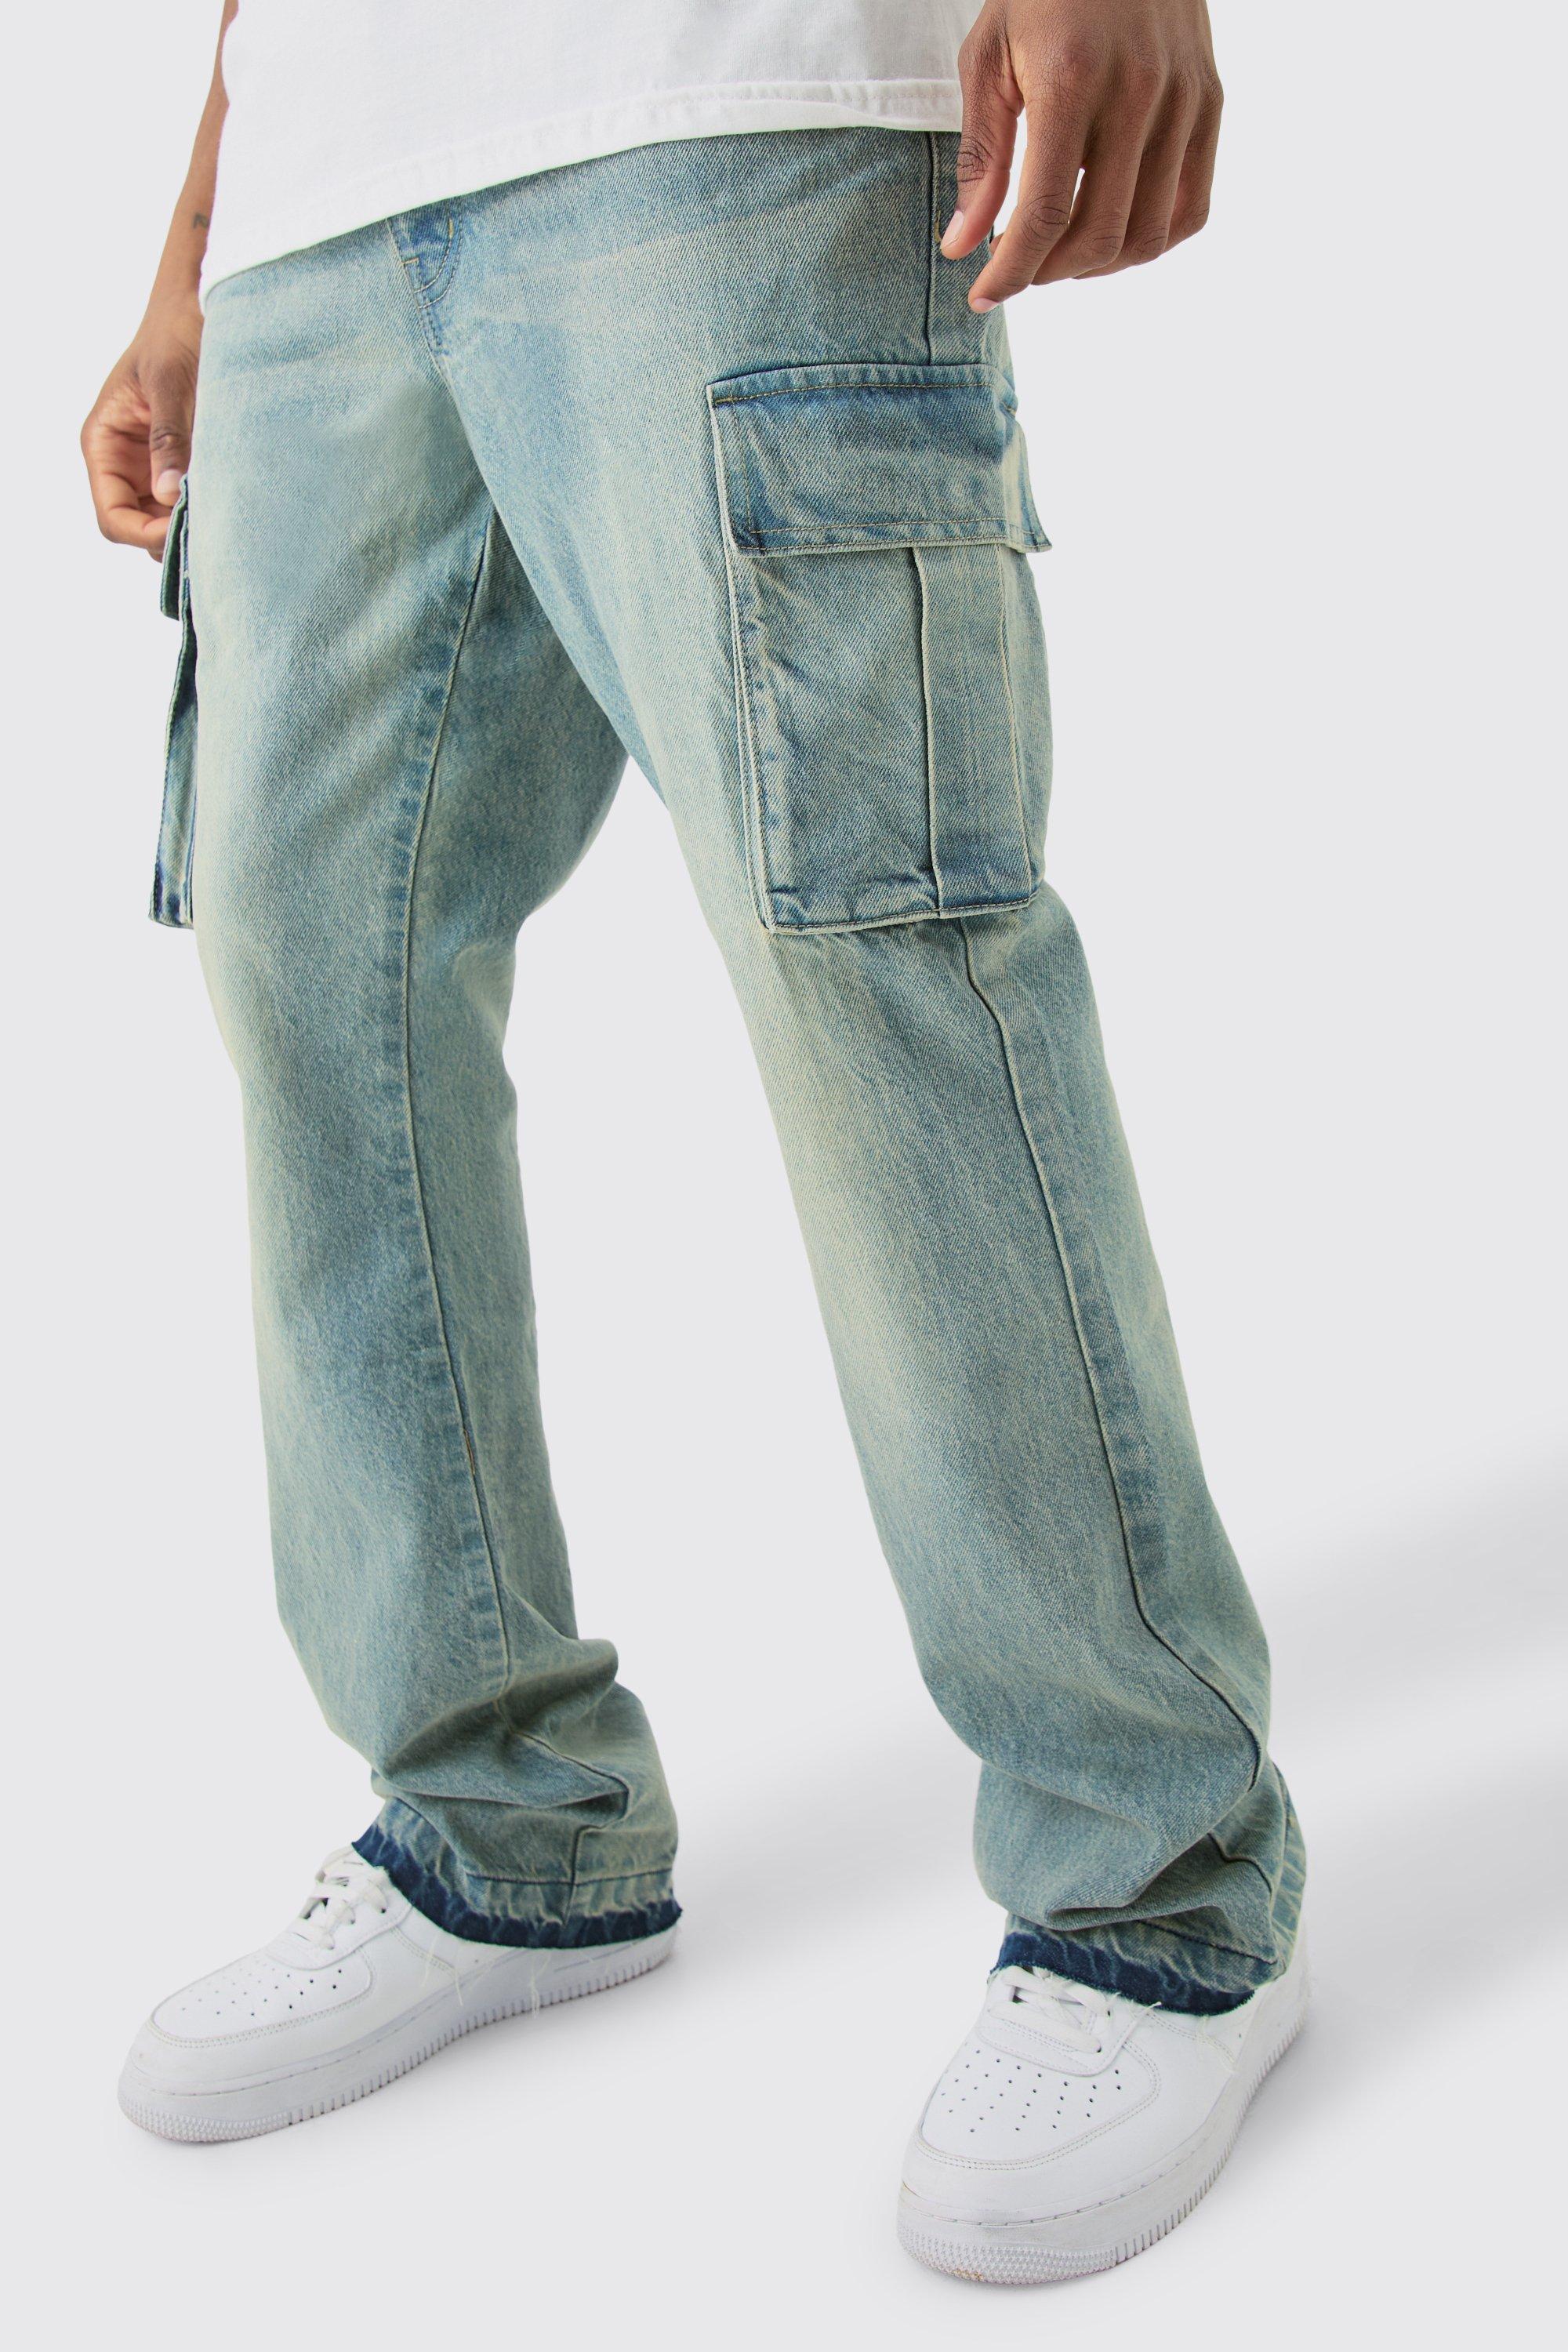 Boohoo Tall Onbewerkte Flared Cargo Jeans, Antique Blue